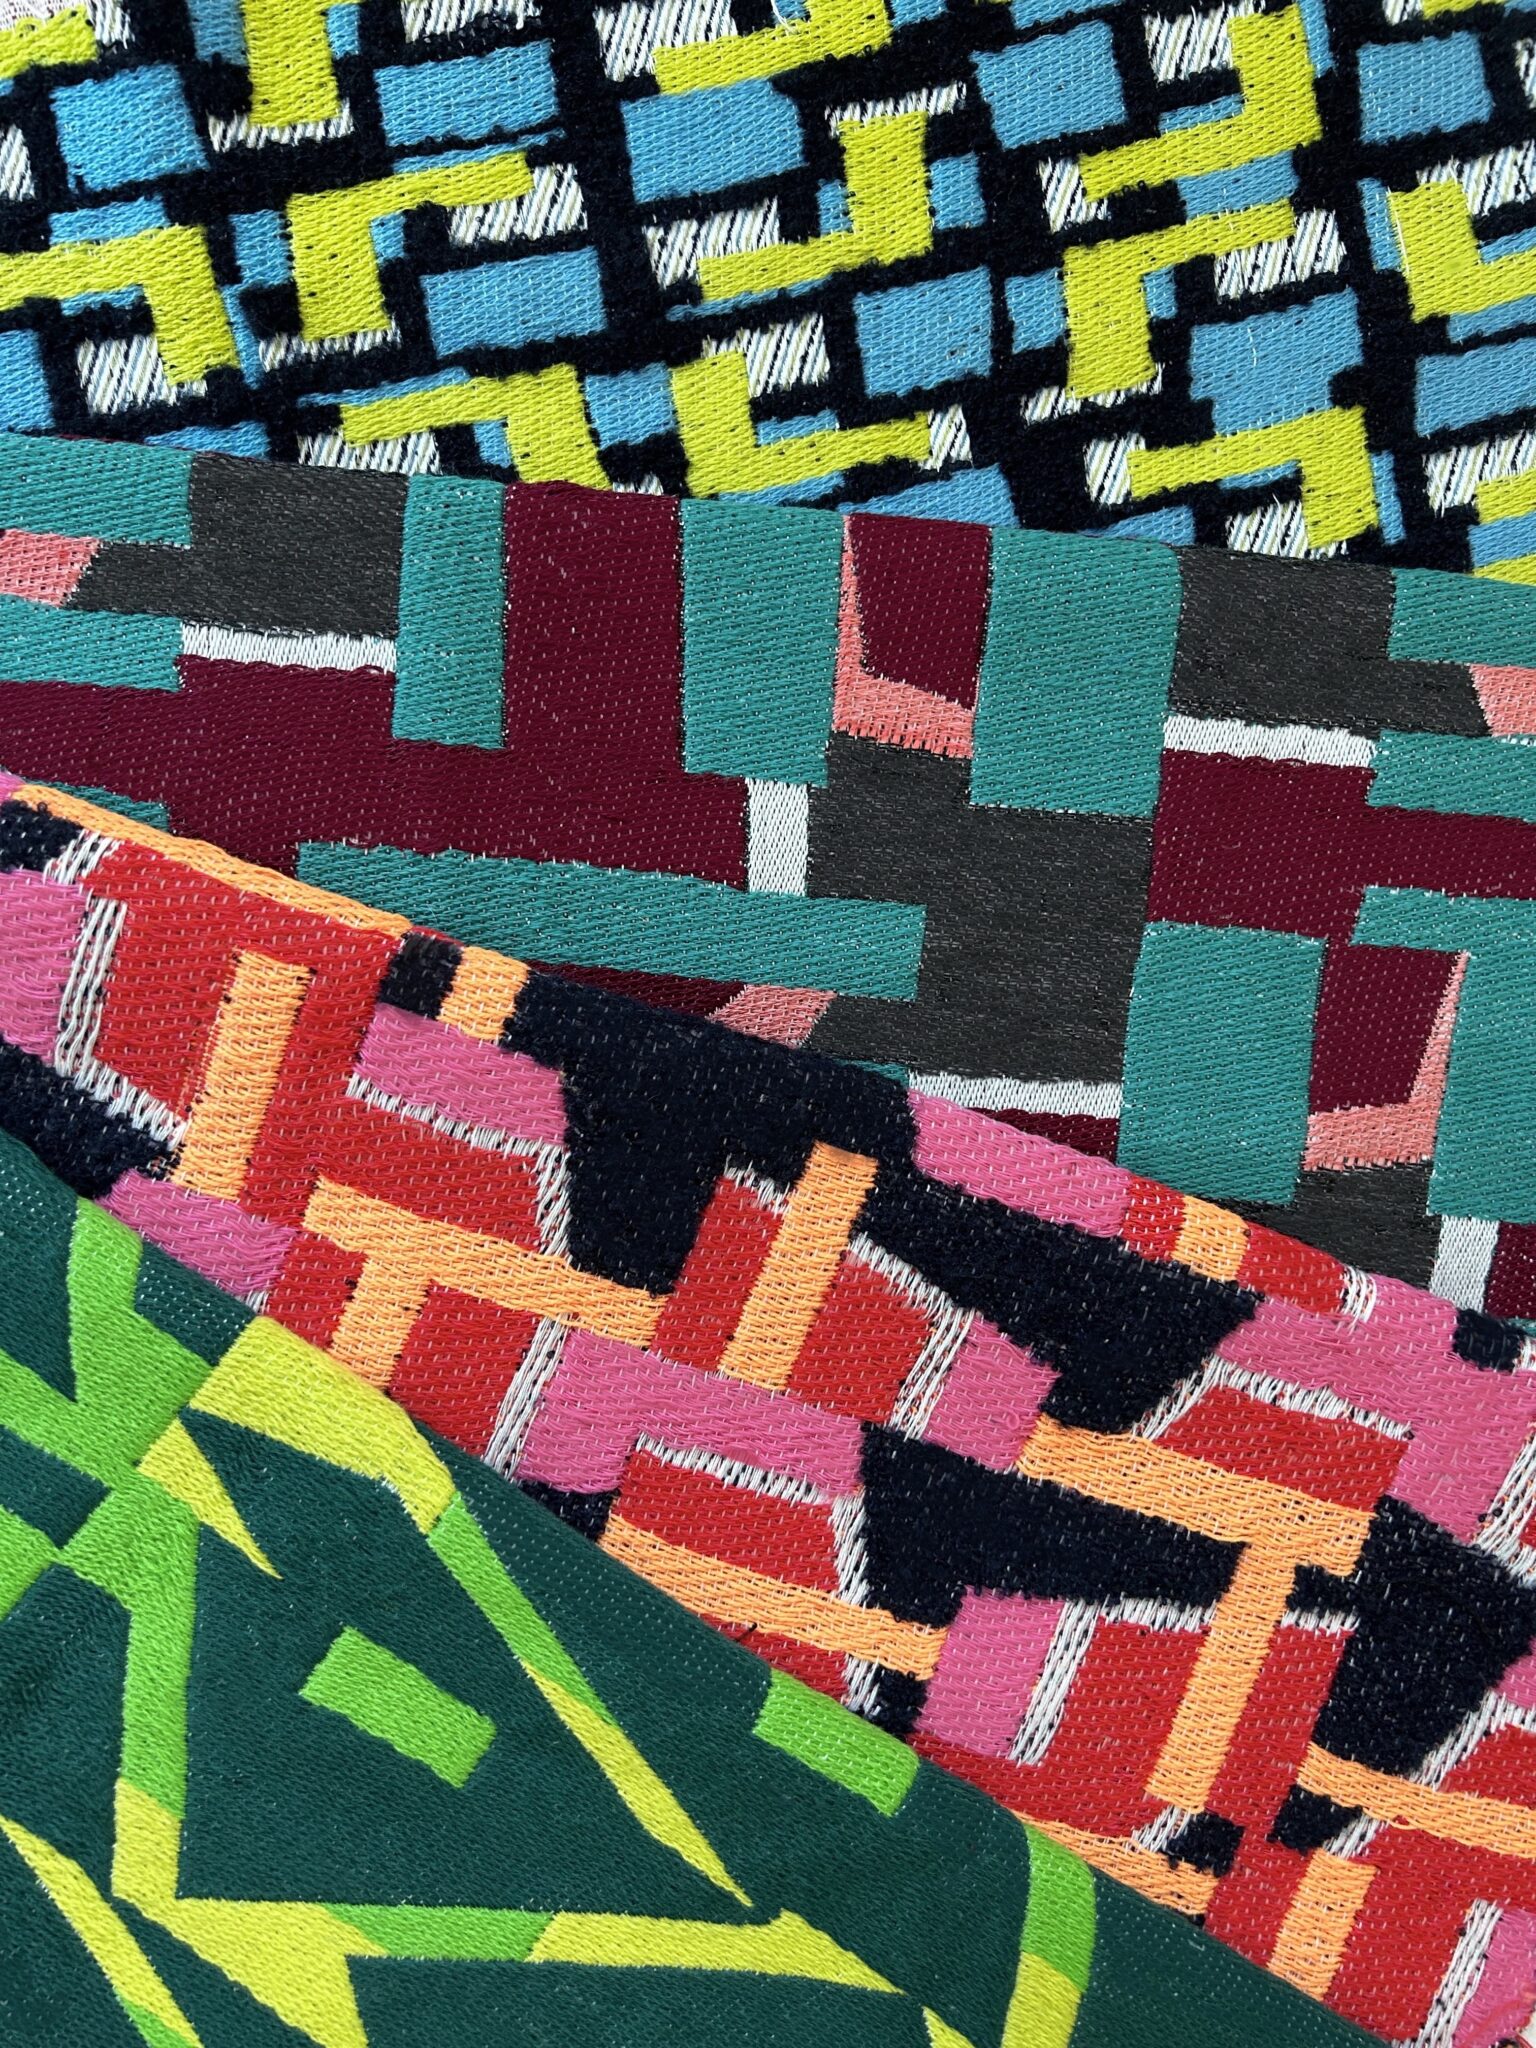 Victoria Hughes’ Textiles